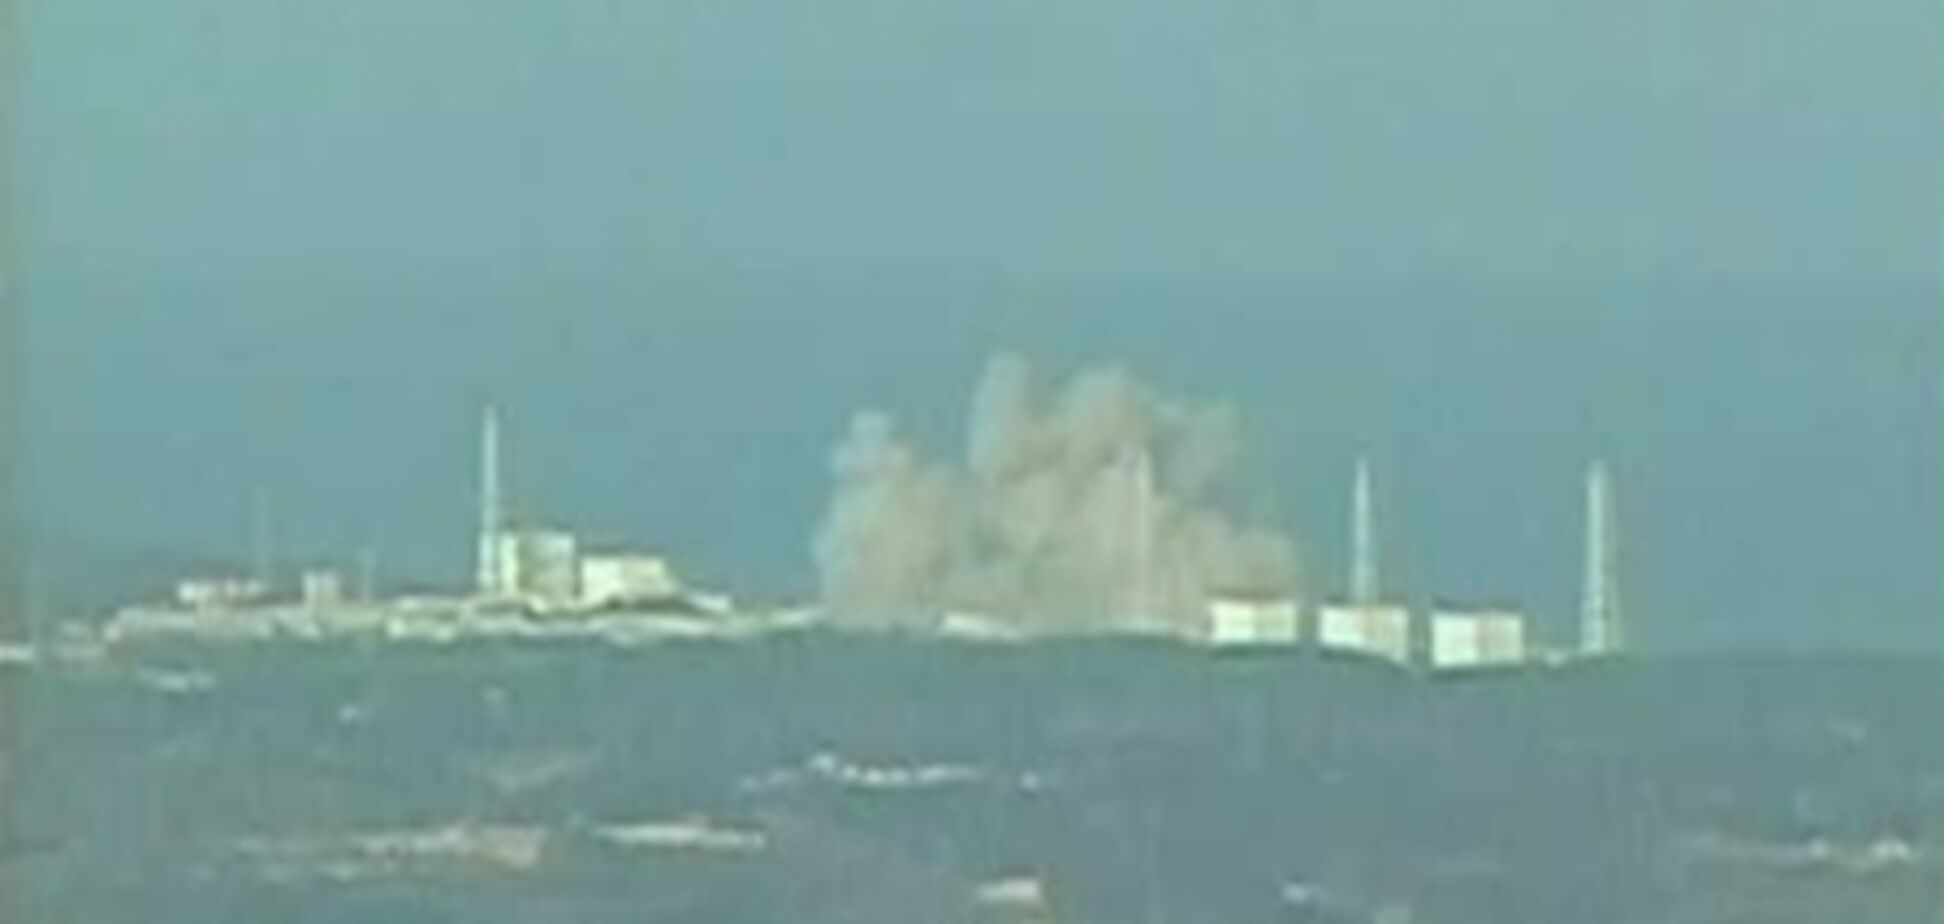 США отводят суда от 'Фукусима-1' после обнаружения радиоактивного фона